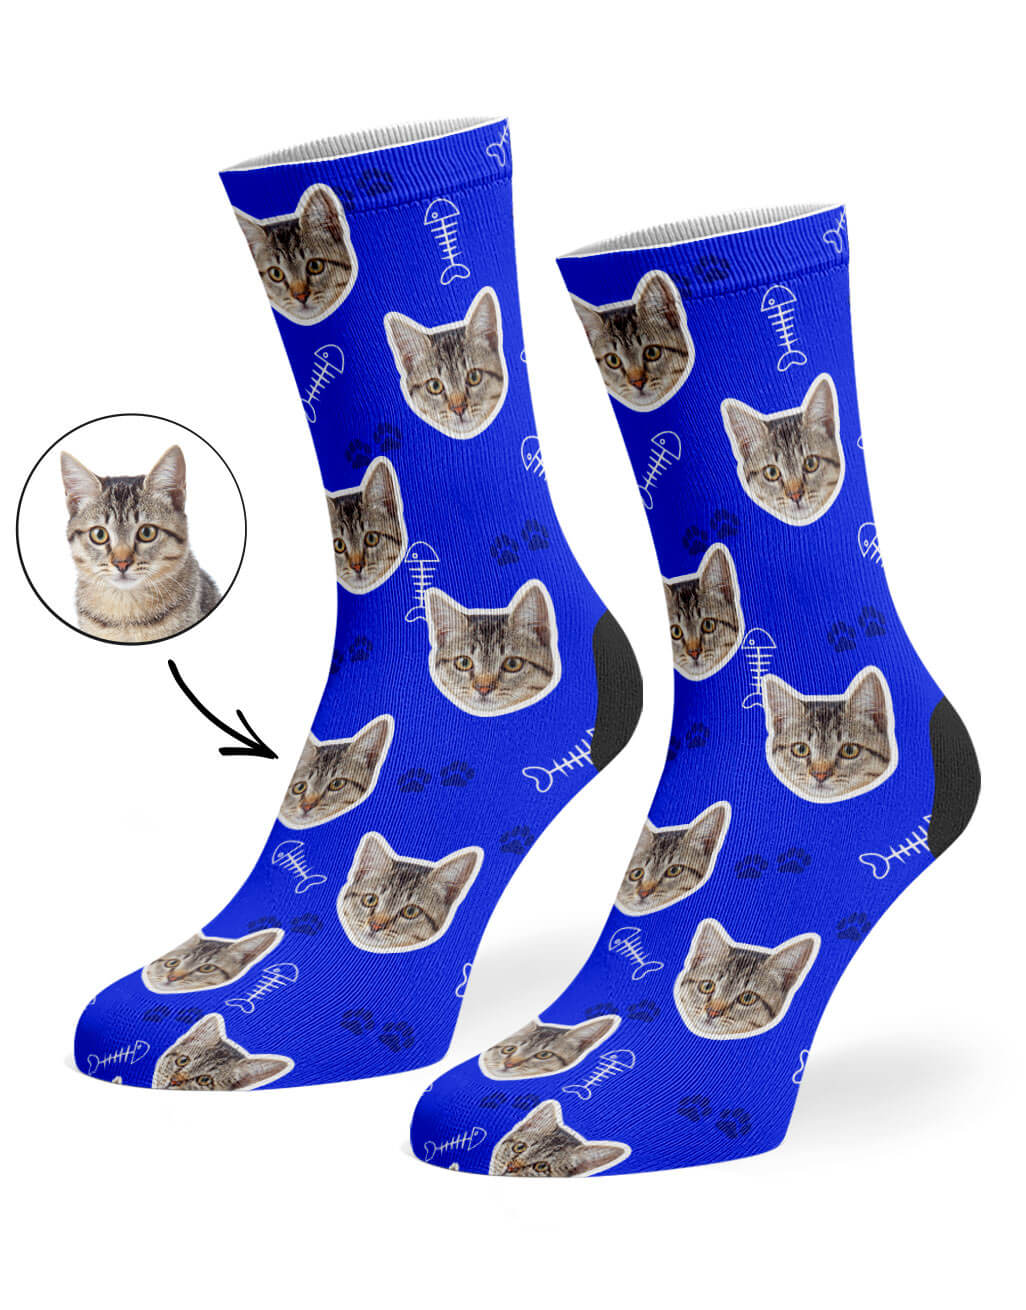 Royal Blue Your Cat On Socks